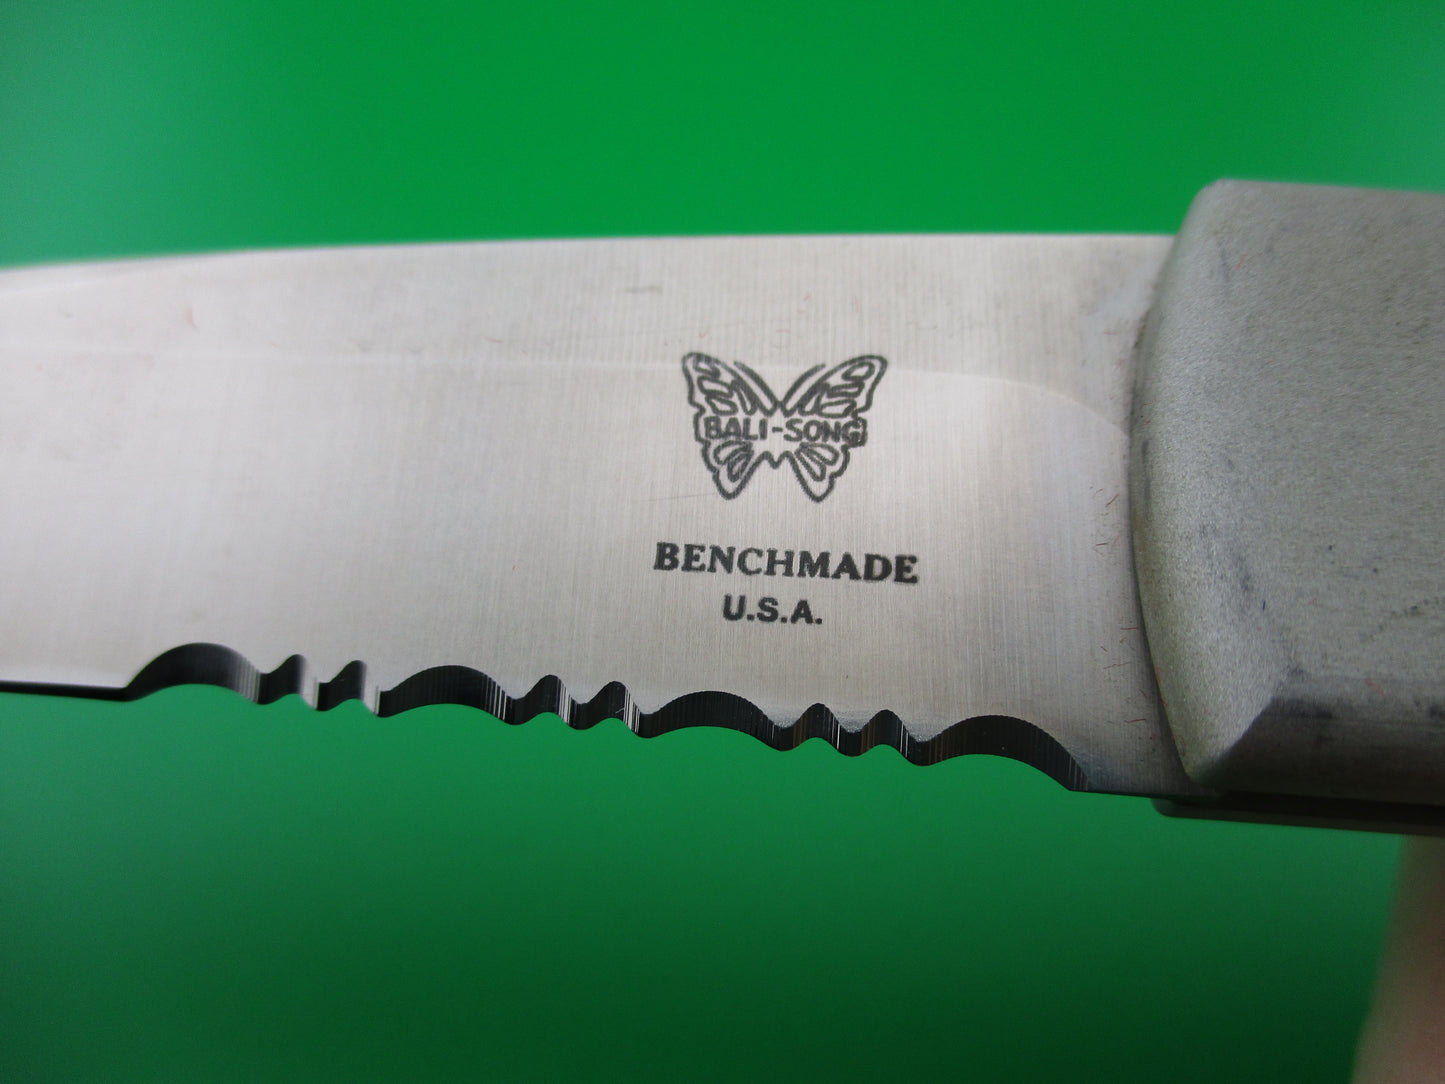 Benchmade 3000S Mel Pardue design Gray/black semi serrated blade automatic